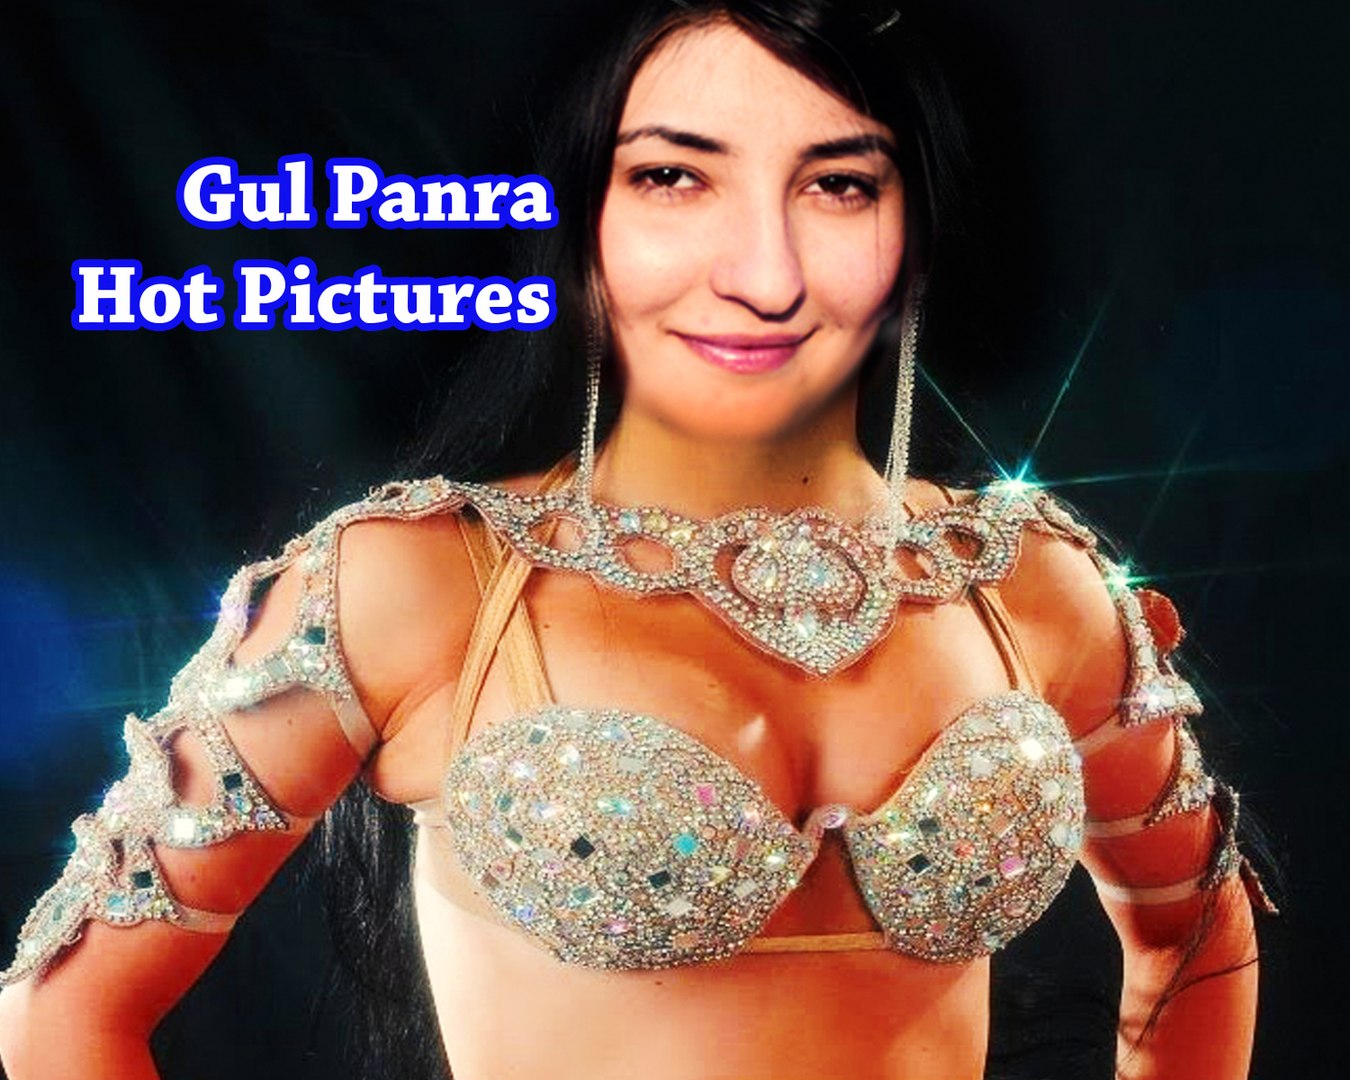 Gul Panra Xnxx - Gul panra Hot & Sexy Pictures - video dailymotion